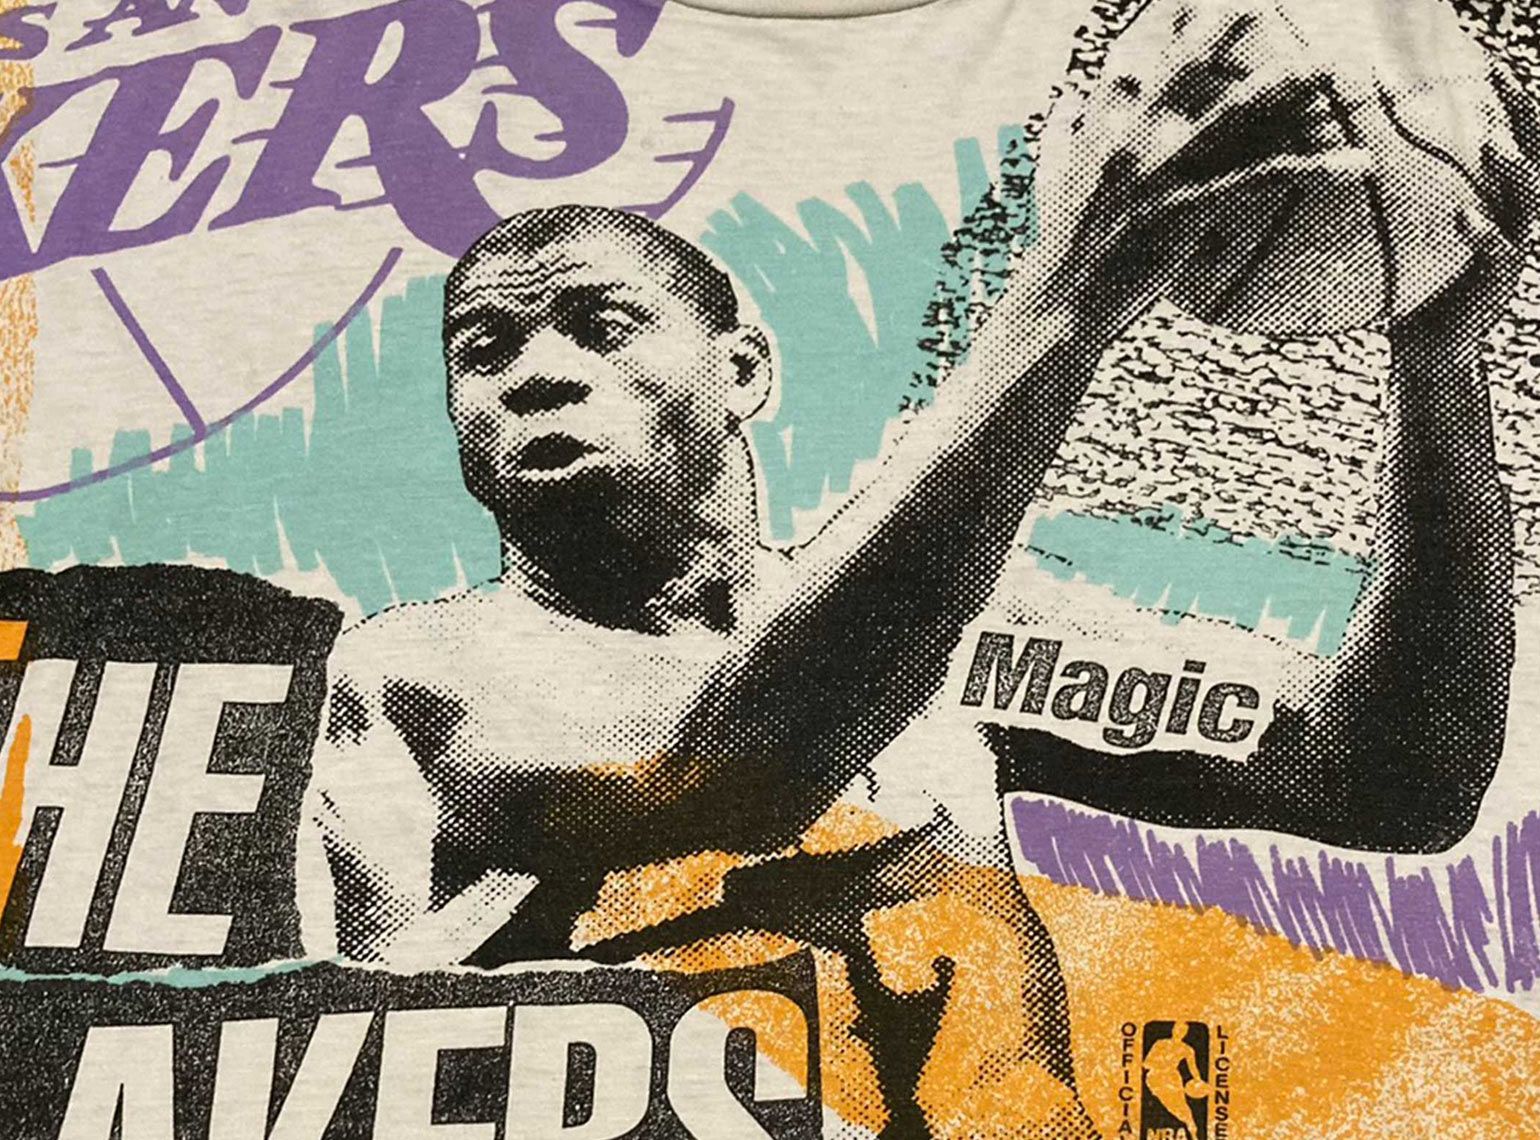 Vintage Lakers 1987 World Champions Shirt - High-Quality Printed Brand